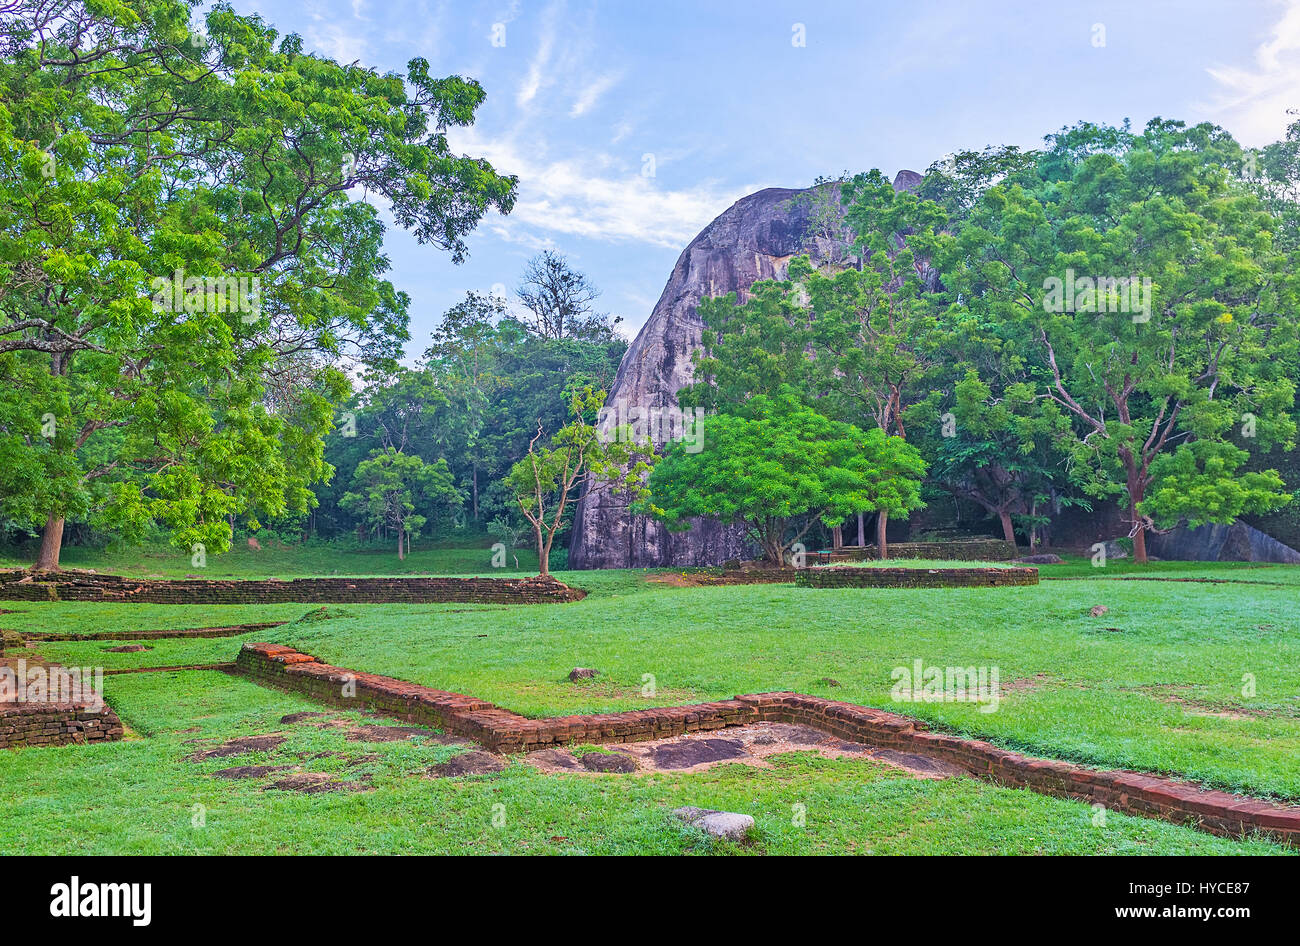 The walk among the ruins of the ancient town at Sigiriya archaeological site, Sri Lanka. Stock Photo